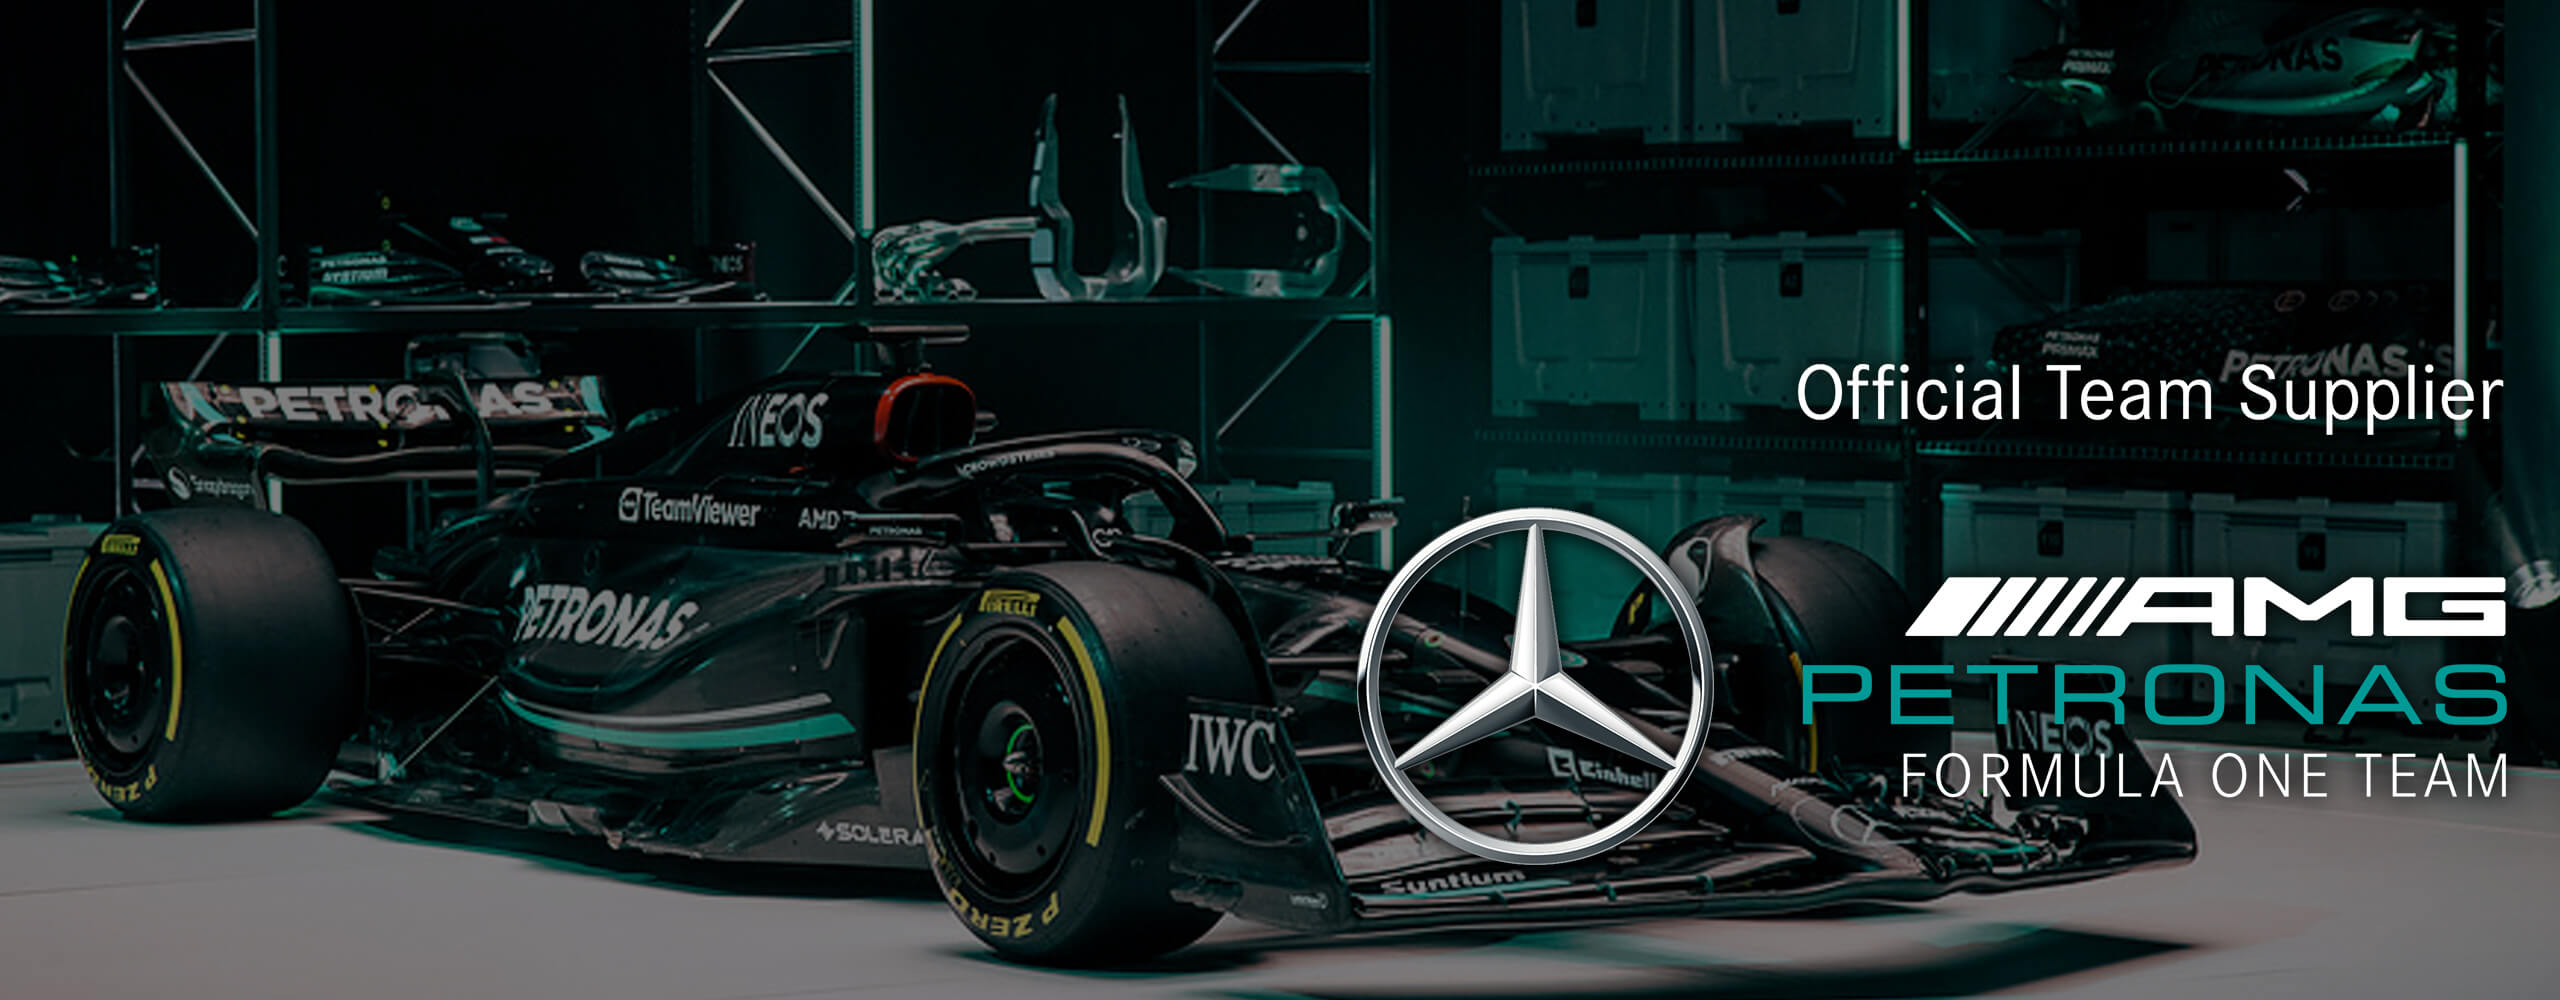 Mercedes-Homepage-Banner-1000